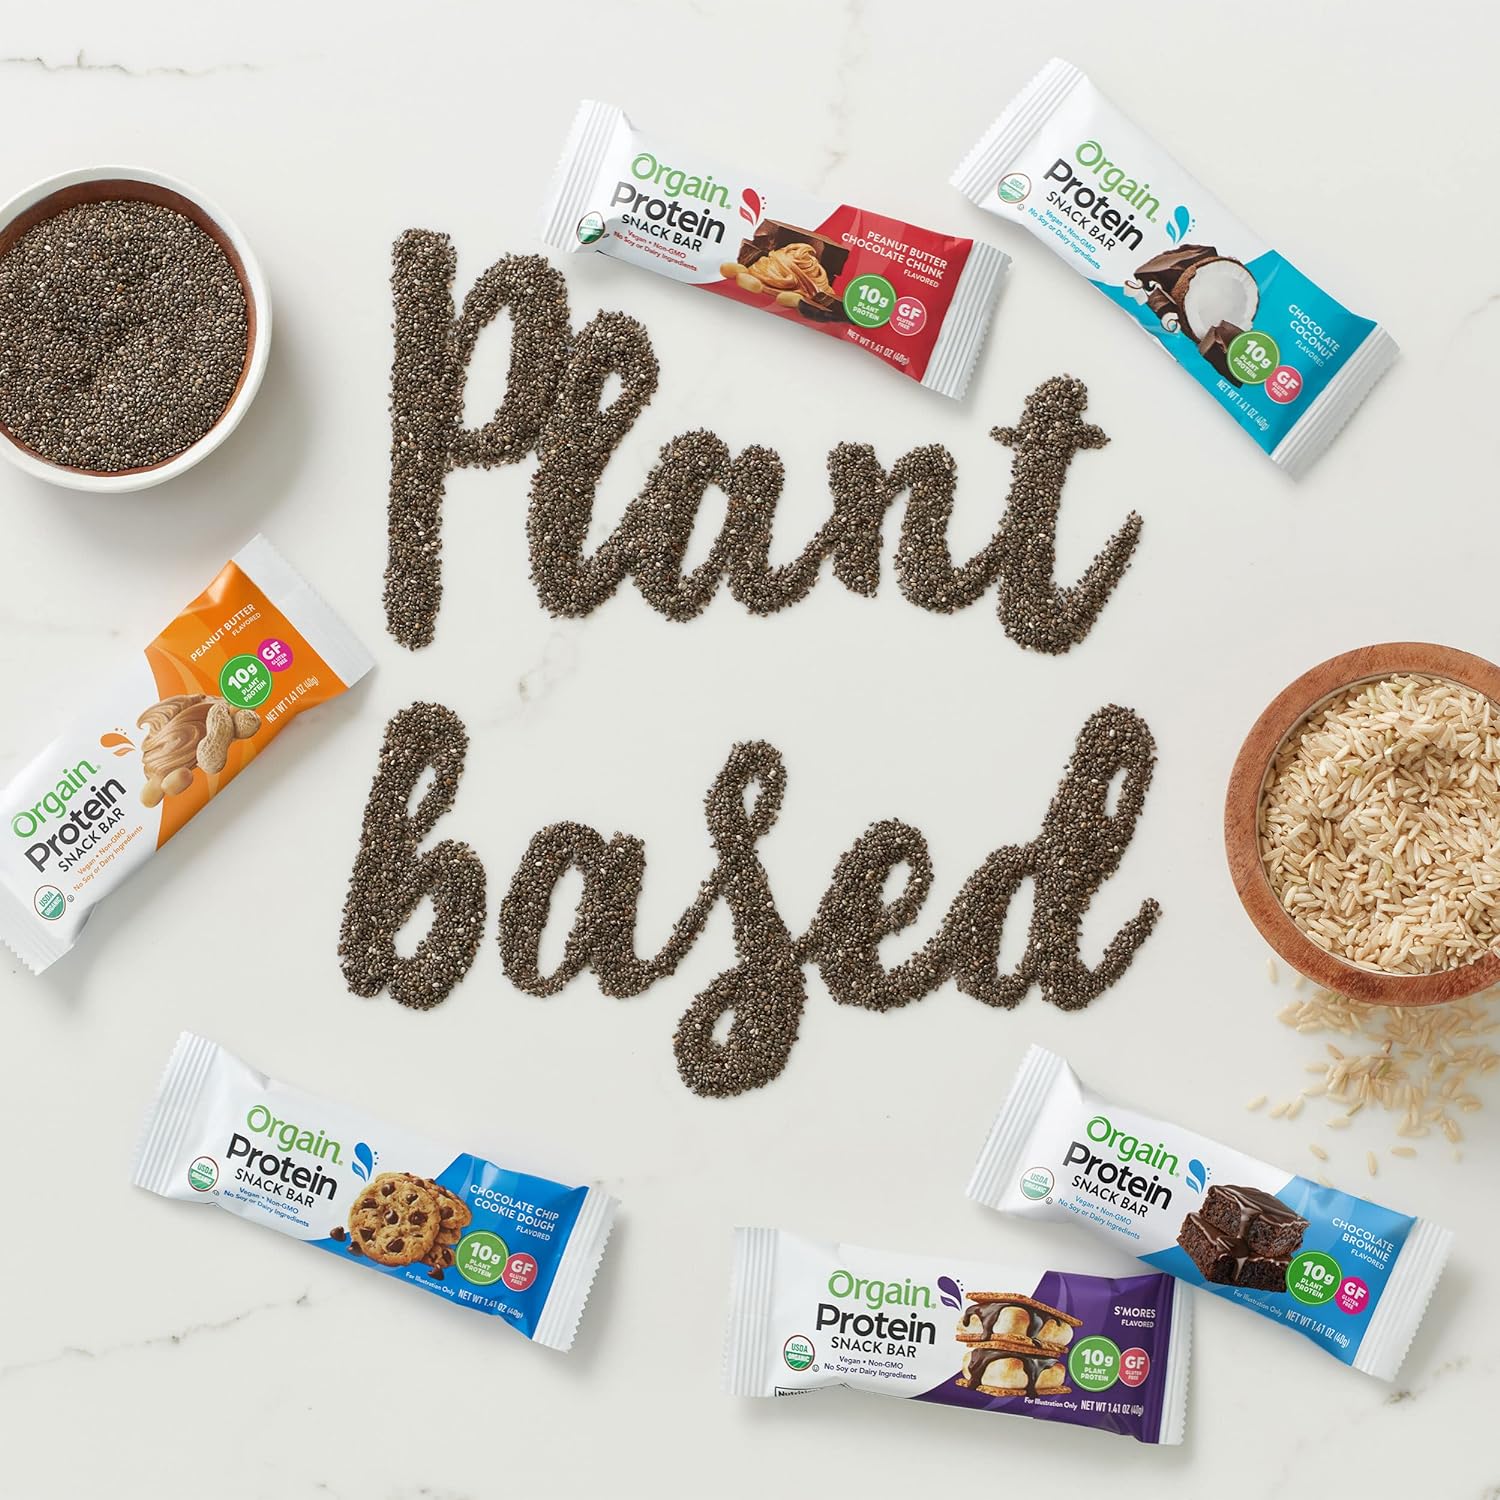 Organic Vegan Protein Bars, Peanut Butter Chocolate Chunk 